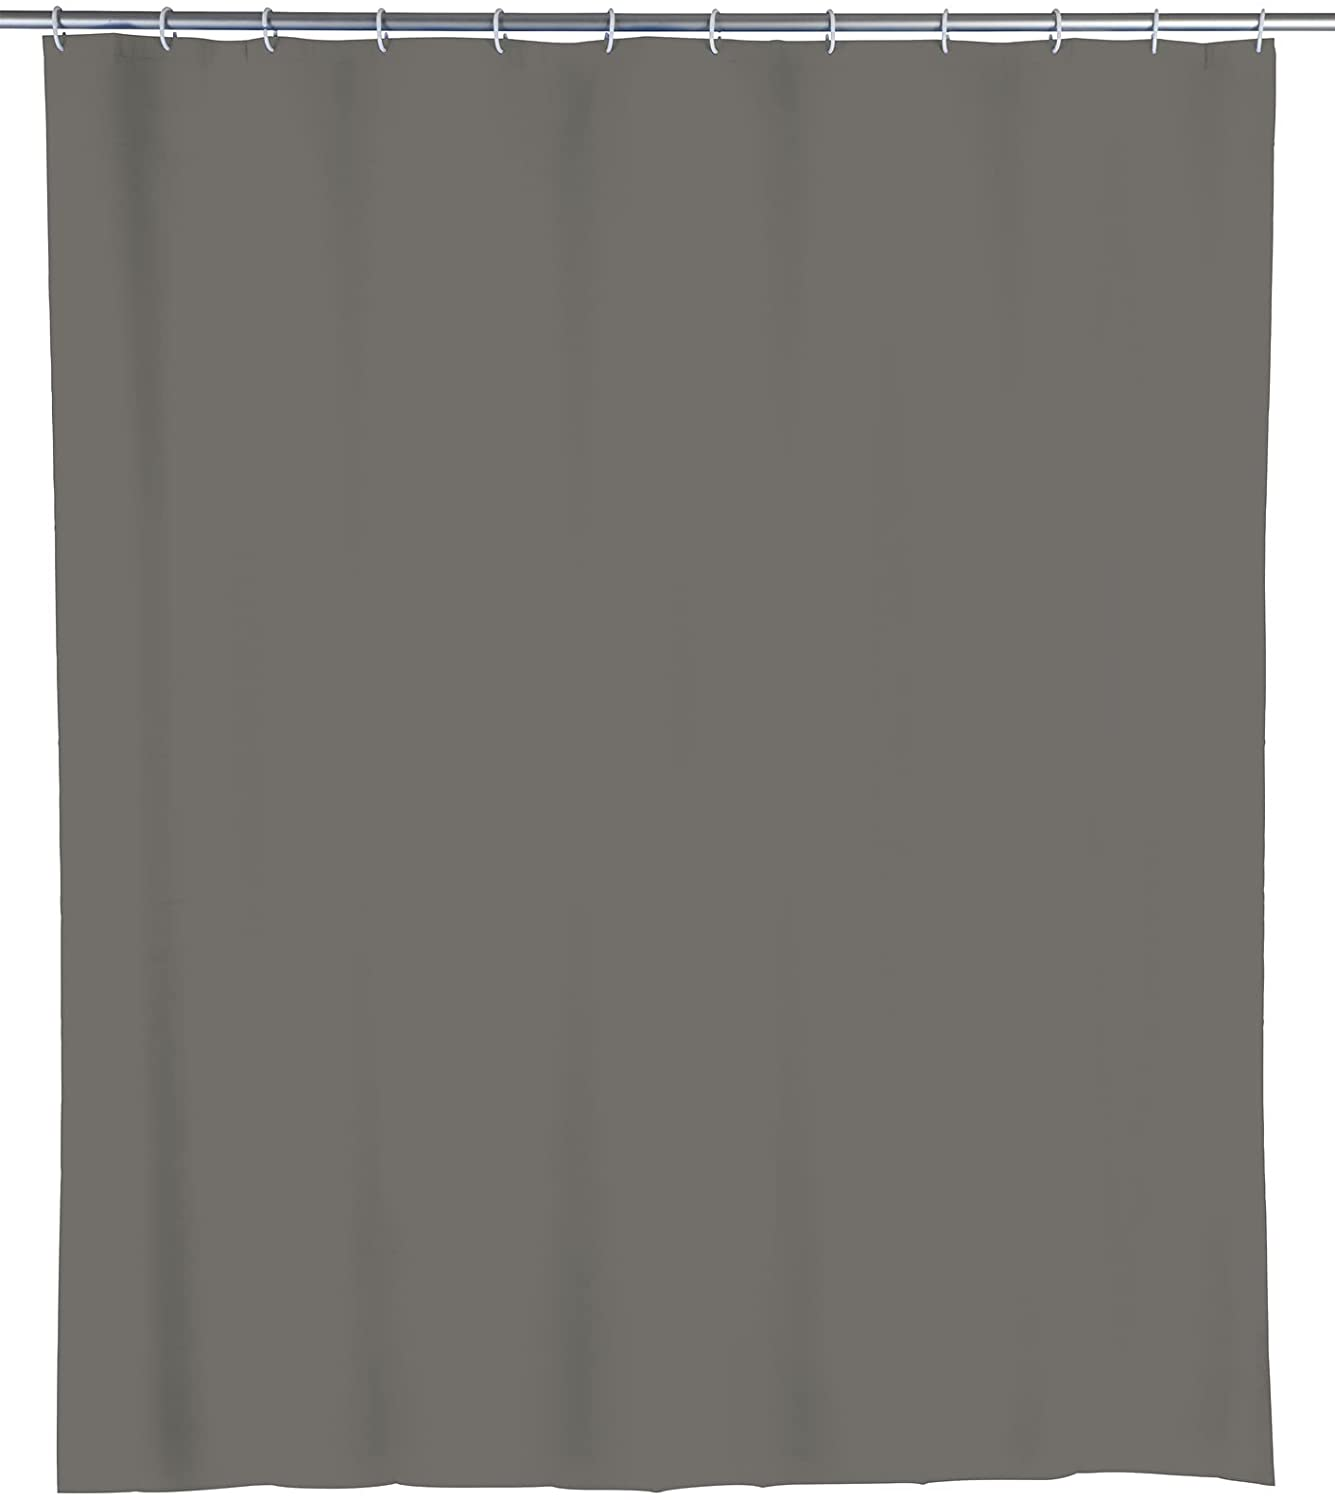 Duschvorhang Mouse Grey - wasserdicht, pflegeleicht, Polyethylen-Vinylacetat, 180 x 200 cm, Grau